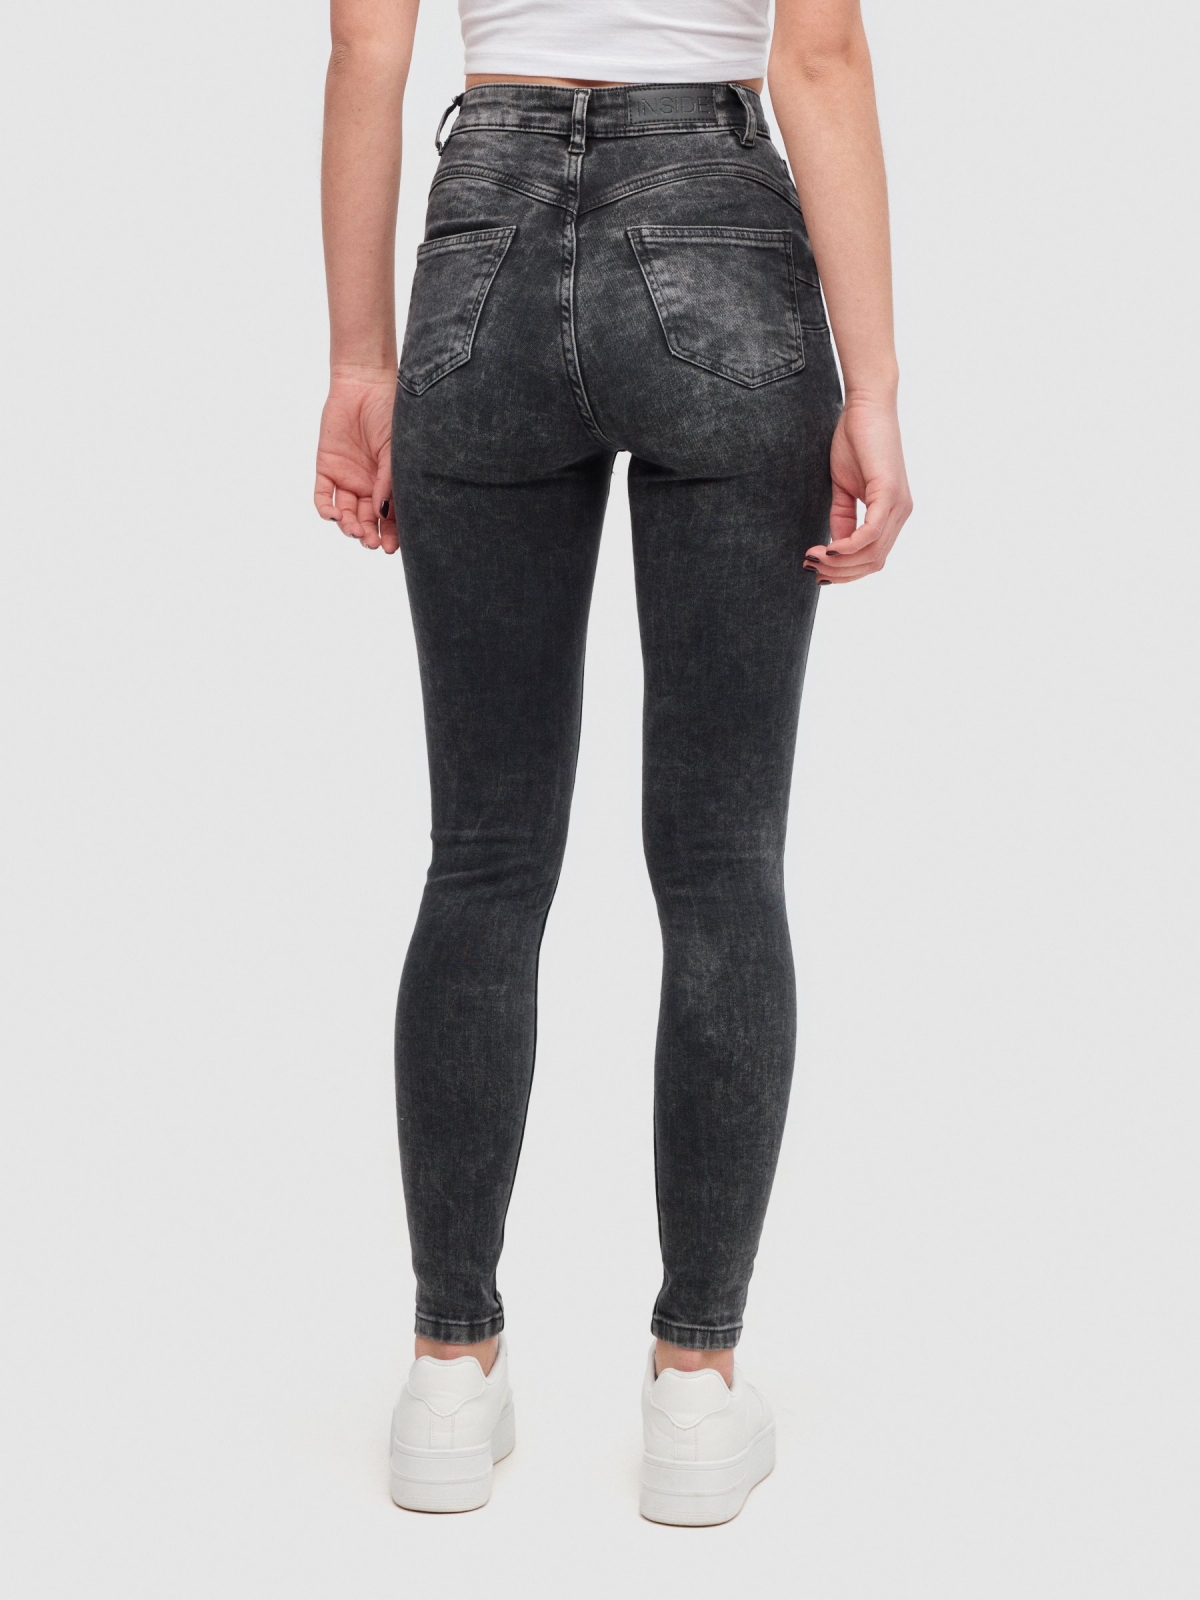 Jeans skinny push up preto vista meia traseira